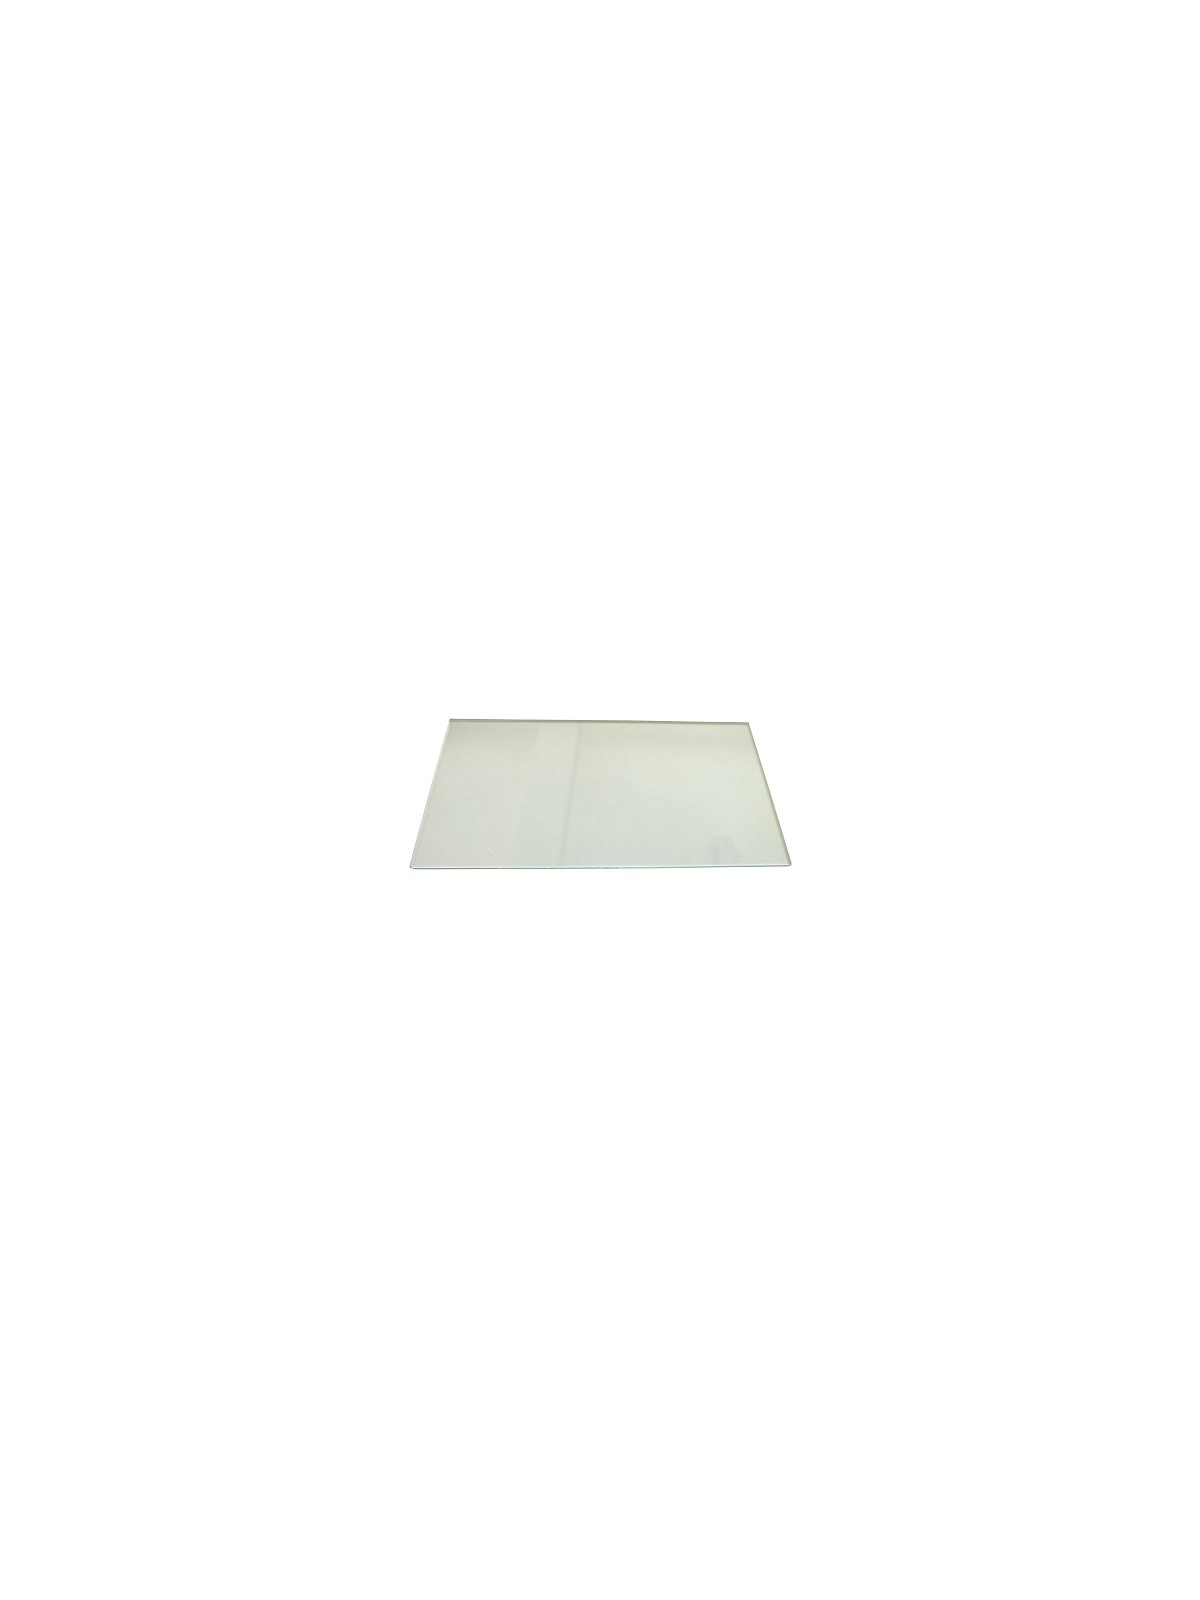 Placa rectangular transparente AXPET, 120 x 2 x 240 mm.